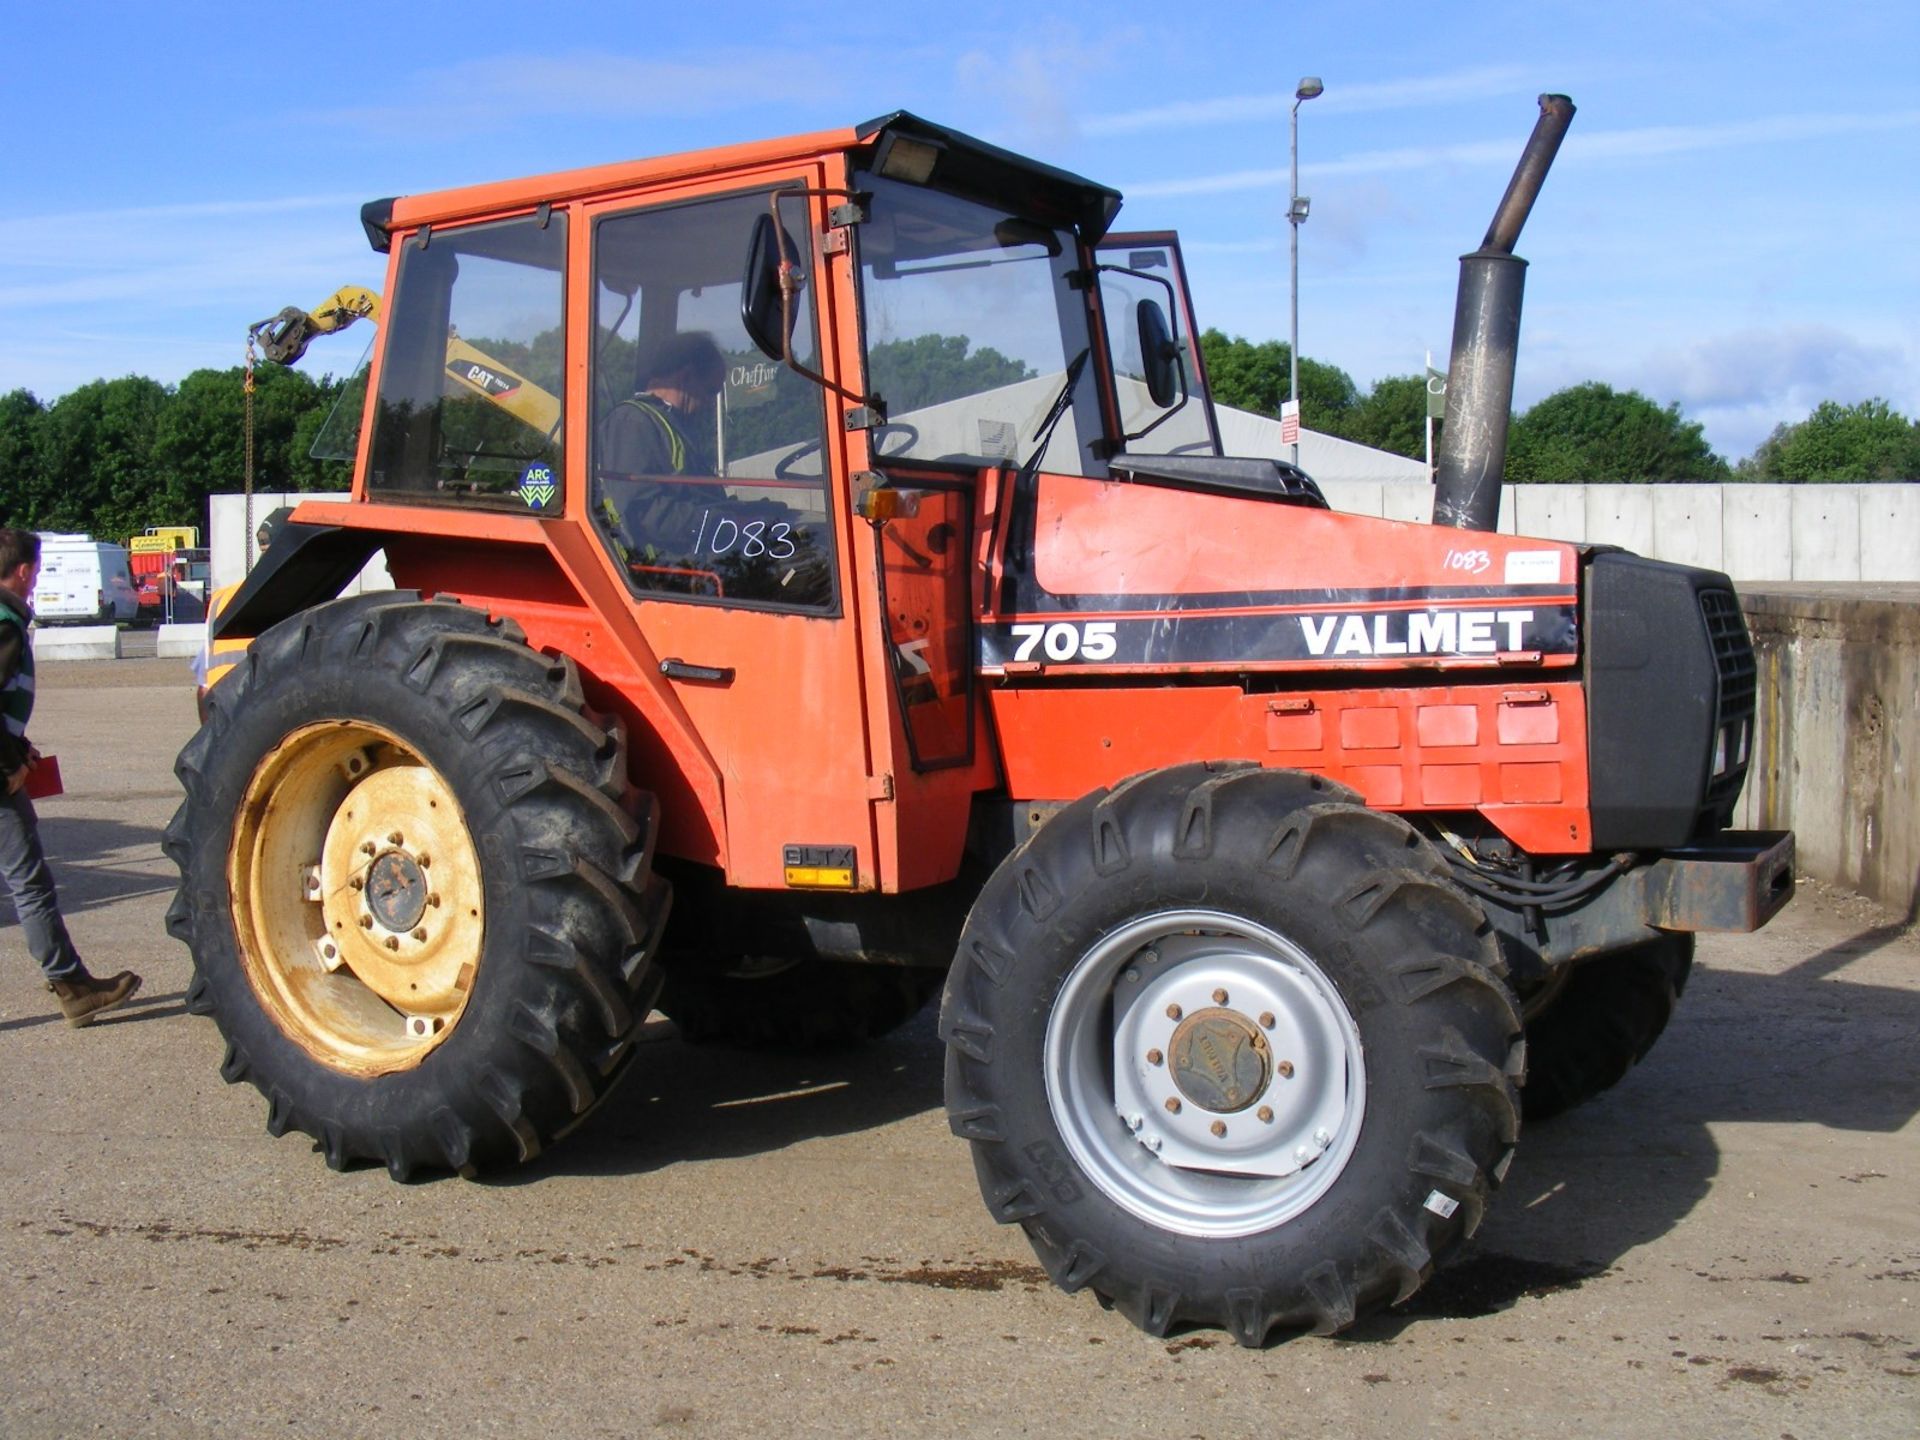 Valmet 705 Tractor Reg. No. D698 VHH